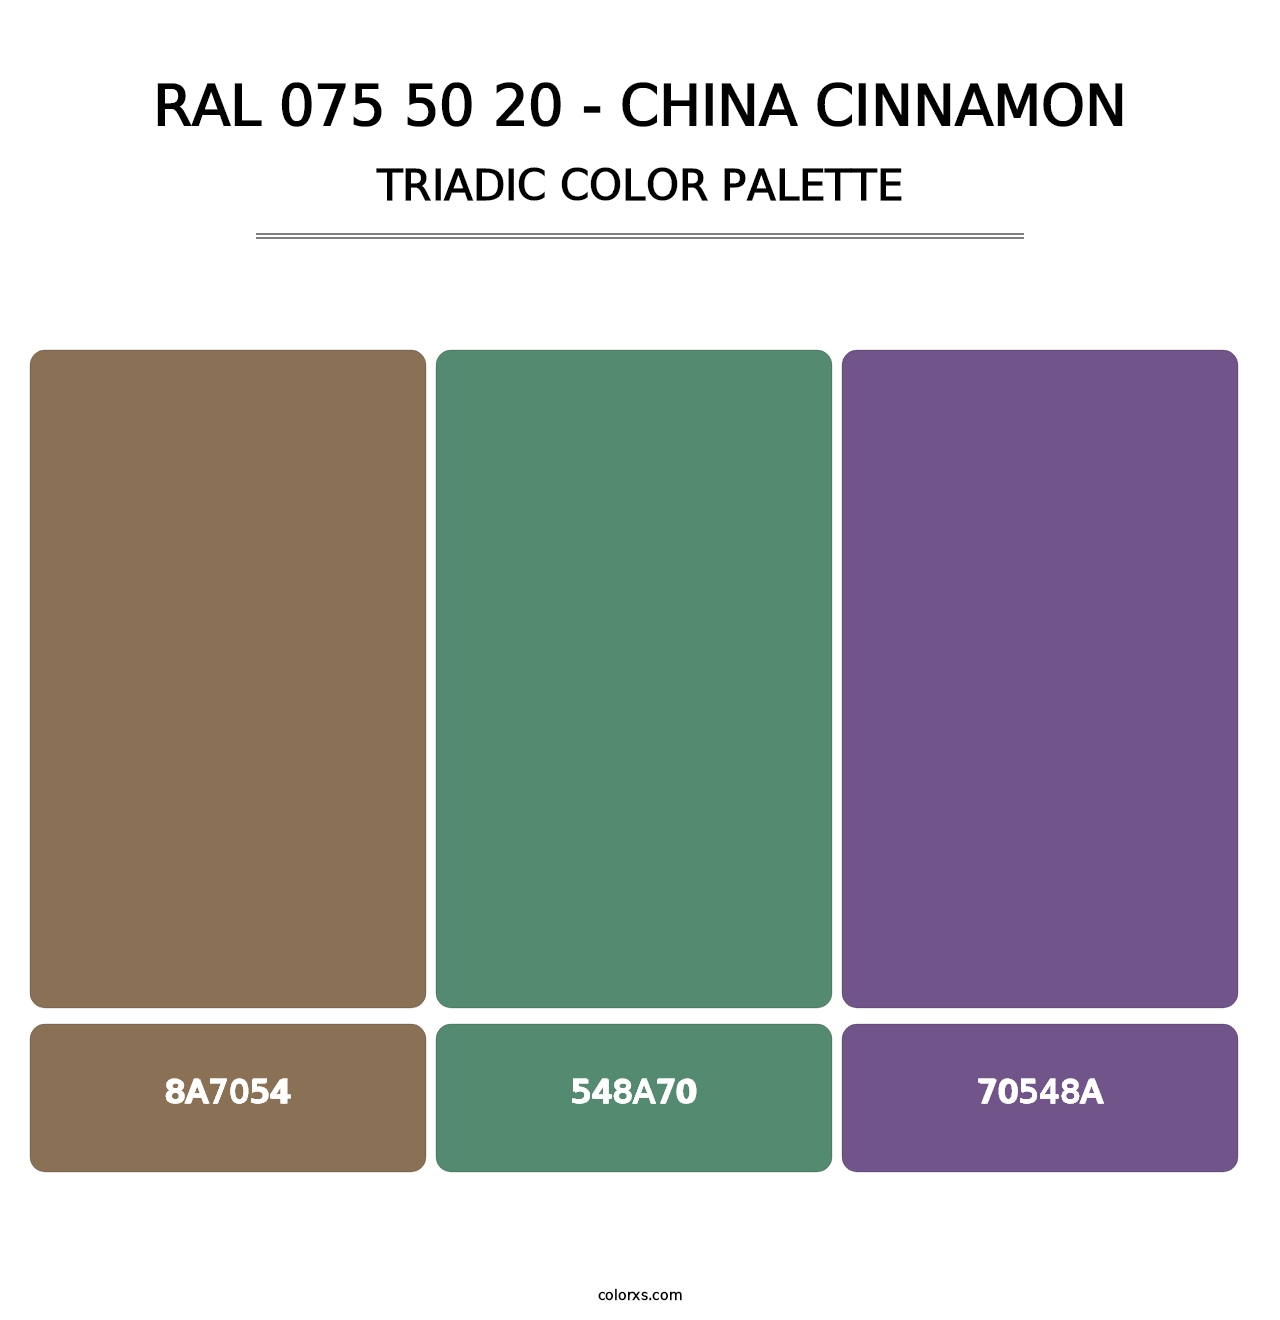 RAL 075 50 20 - China Cinnamon - Triadic Color Palette